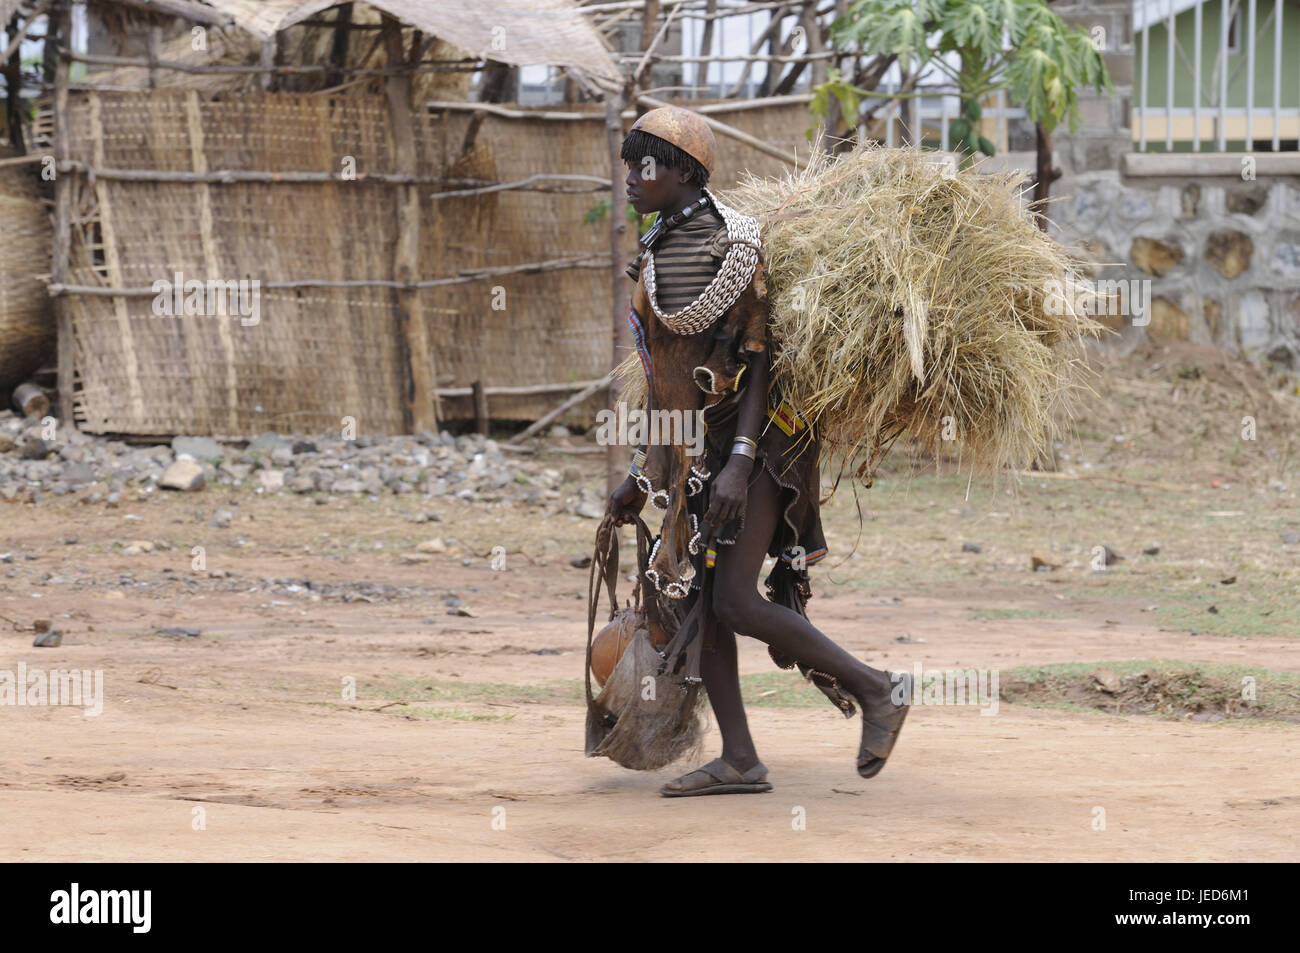 L'uomo, costi, tribù Aari, Street, andare, tag di mercato, Key Afer, Omotal sud, sud Etiopia, Foto Stock